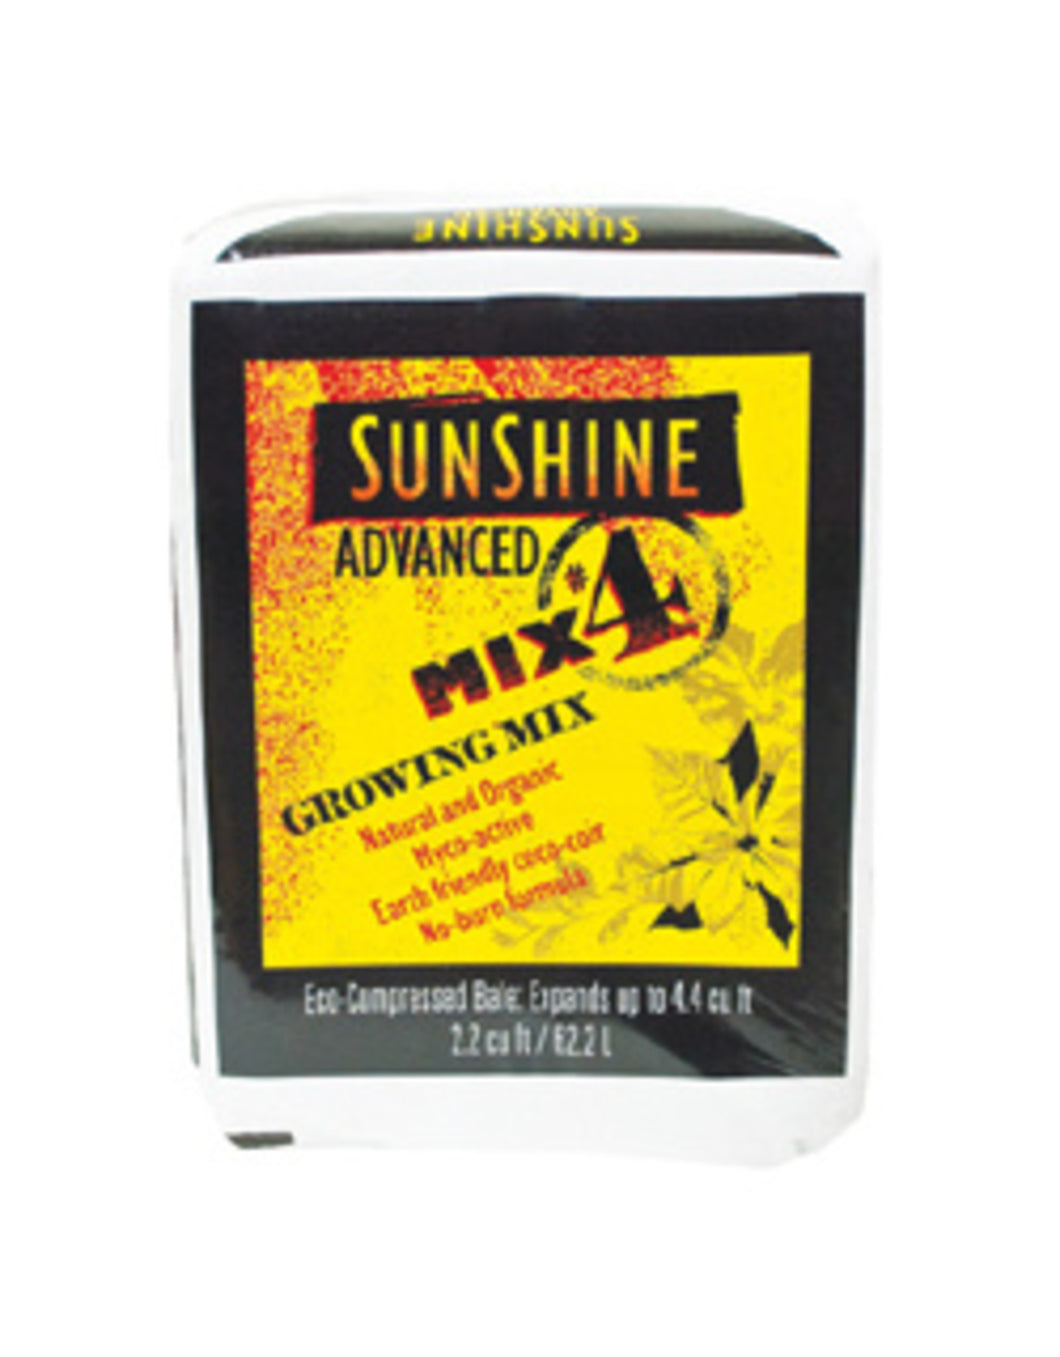 Sunshine Advanced - (Yellow Bag) Mix #4 - 3 Cu/Ft